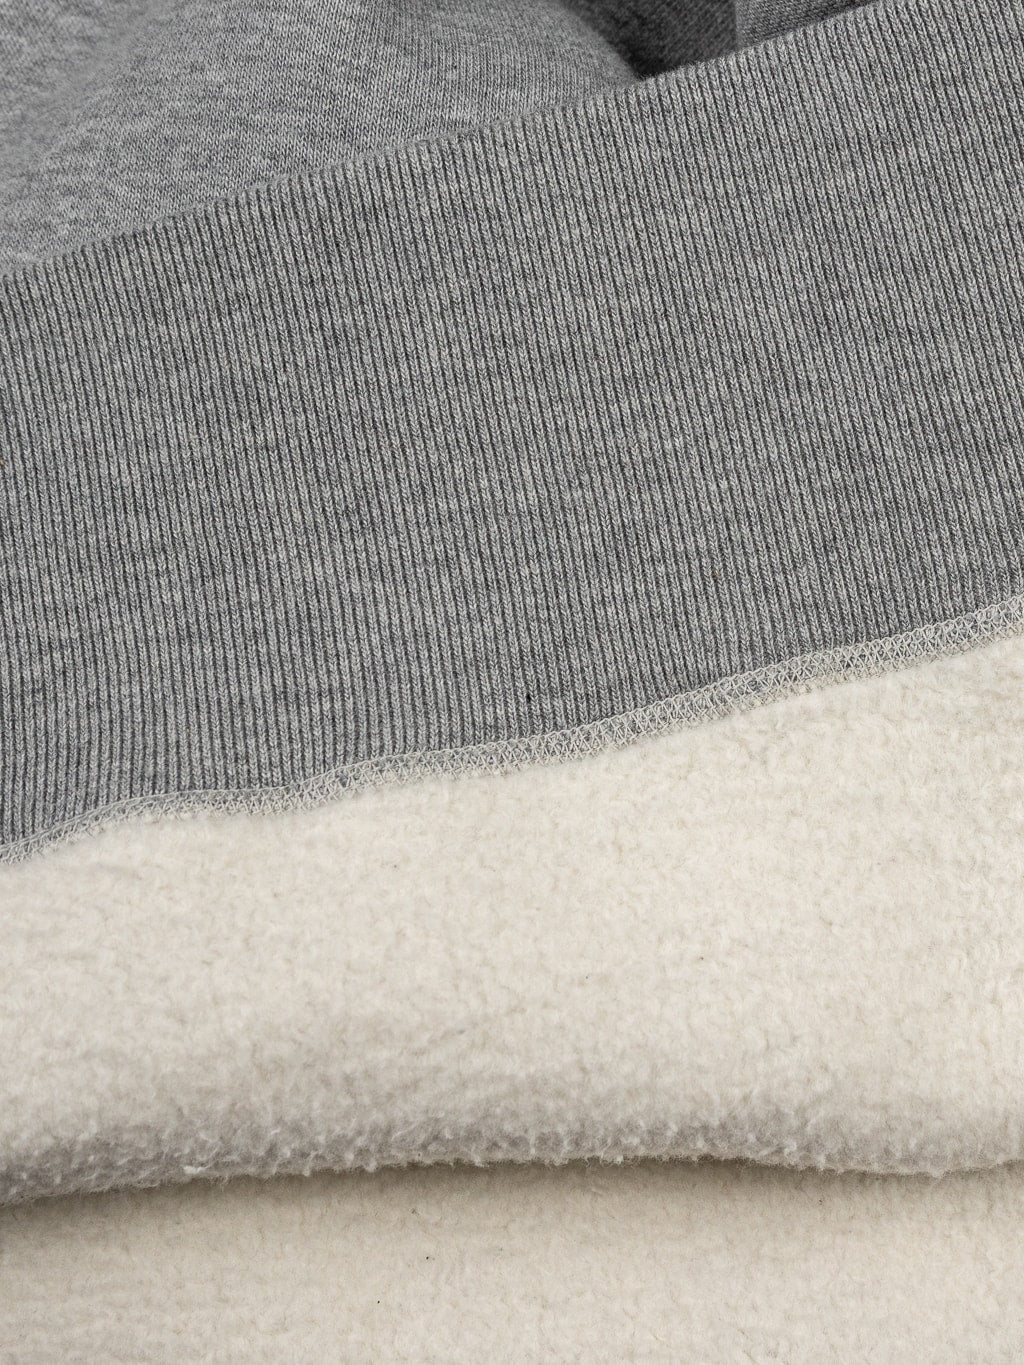 the strike gold loopwheeled sweatshirt grey interior fabric